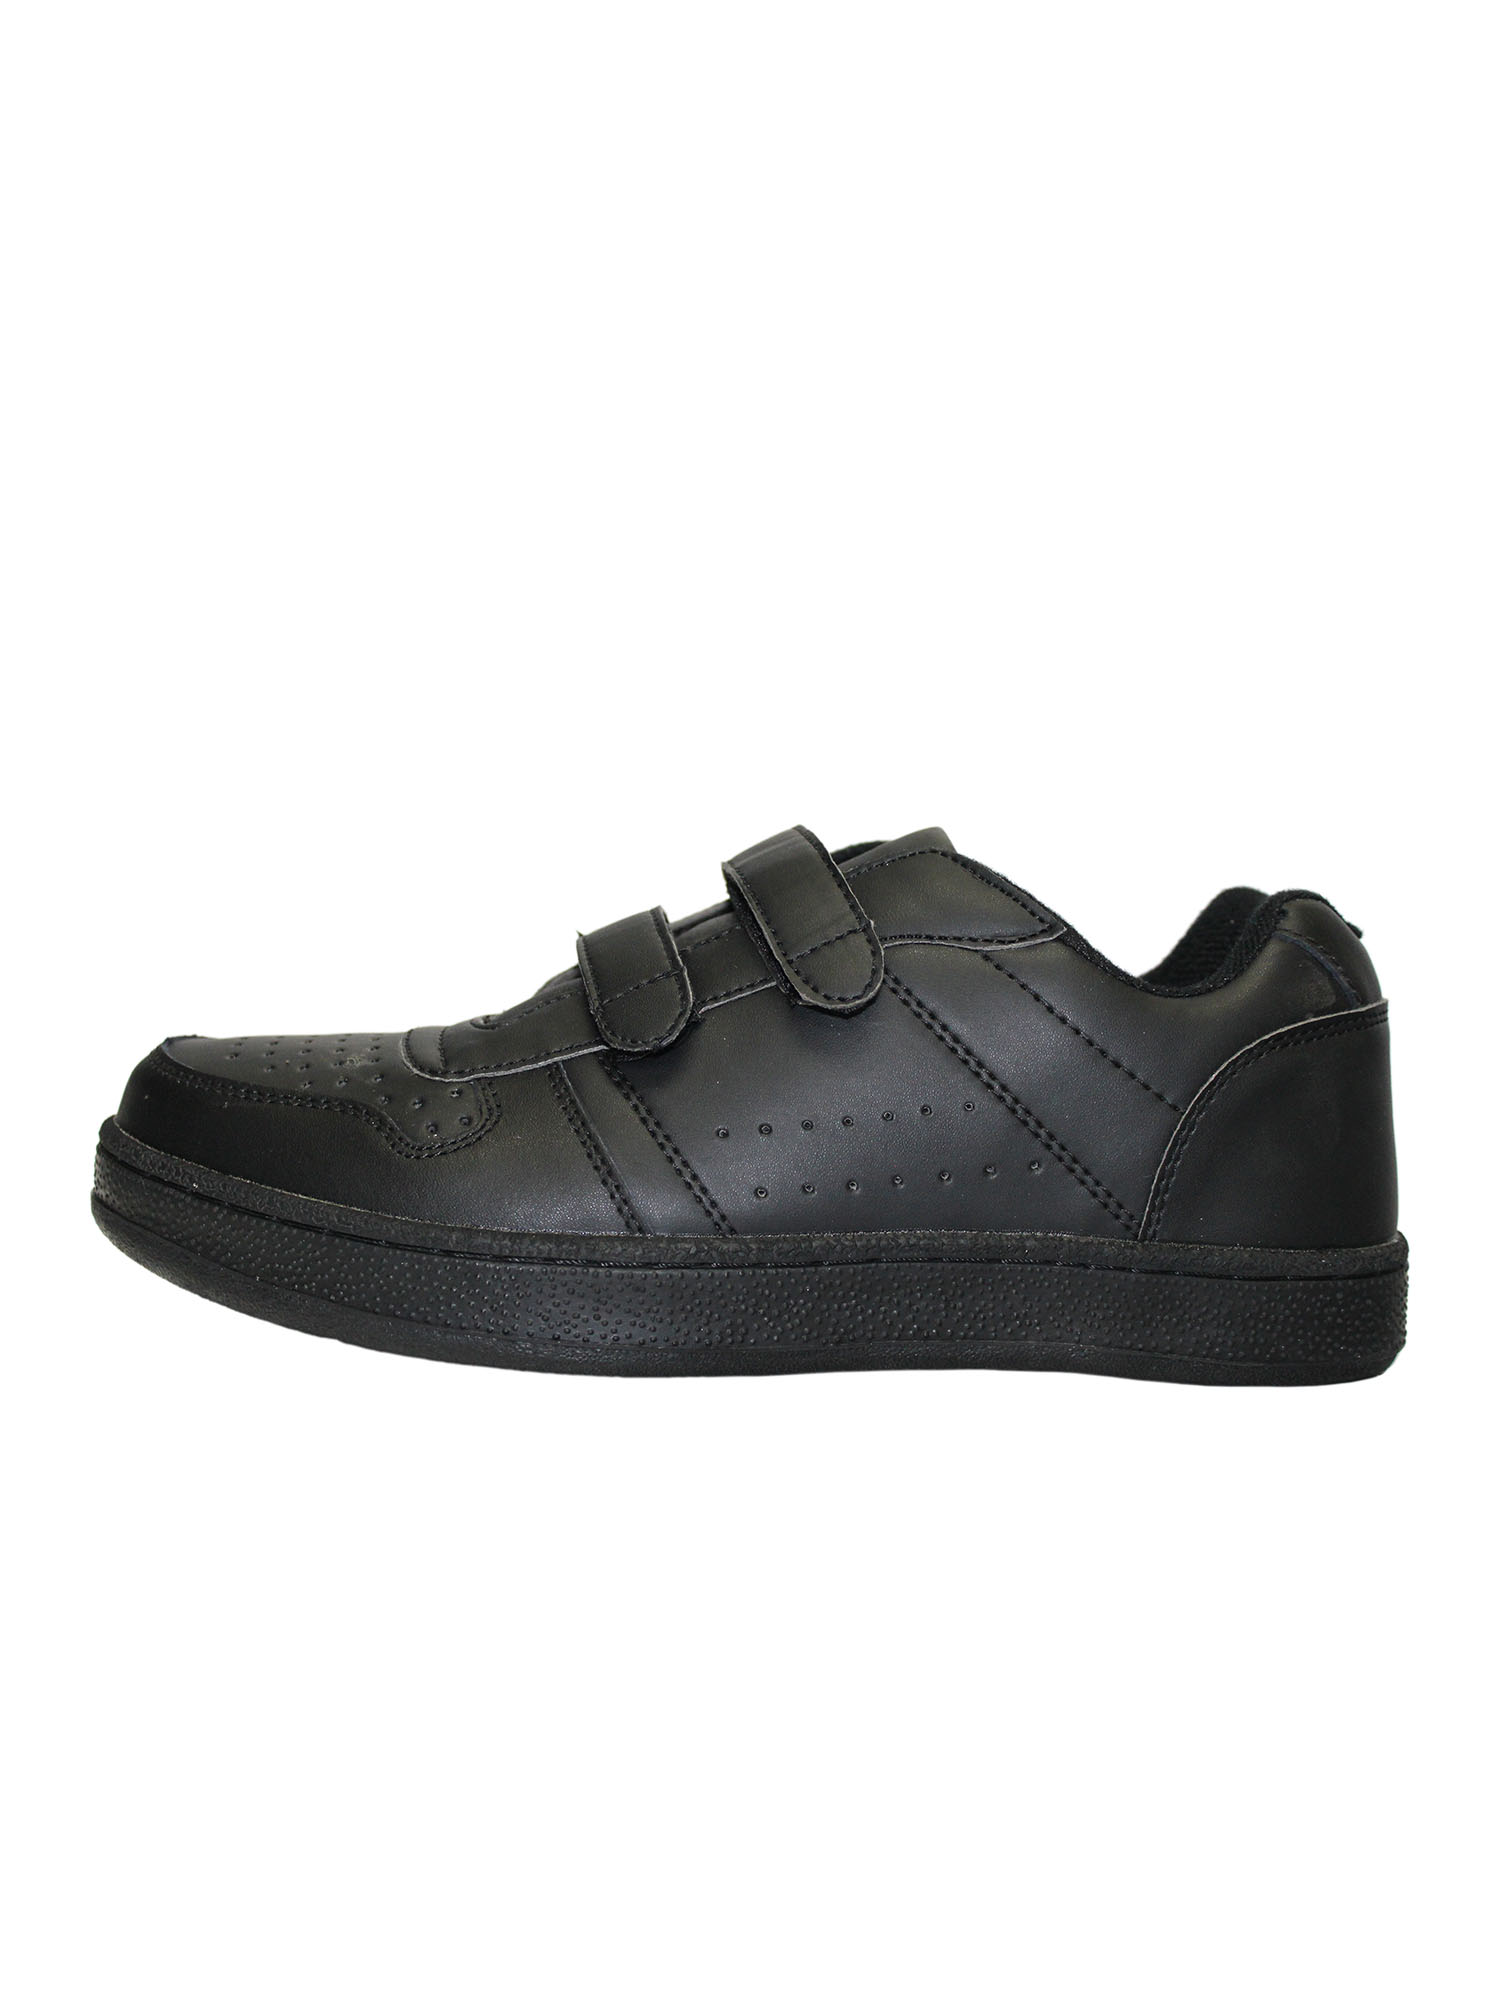 Tanleewa Men's Leather Strap Sneakers Lightweight Hook and Loop Walking Shoe Size 5.5 Adult Male - image 2 of 4